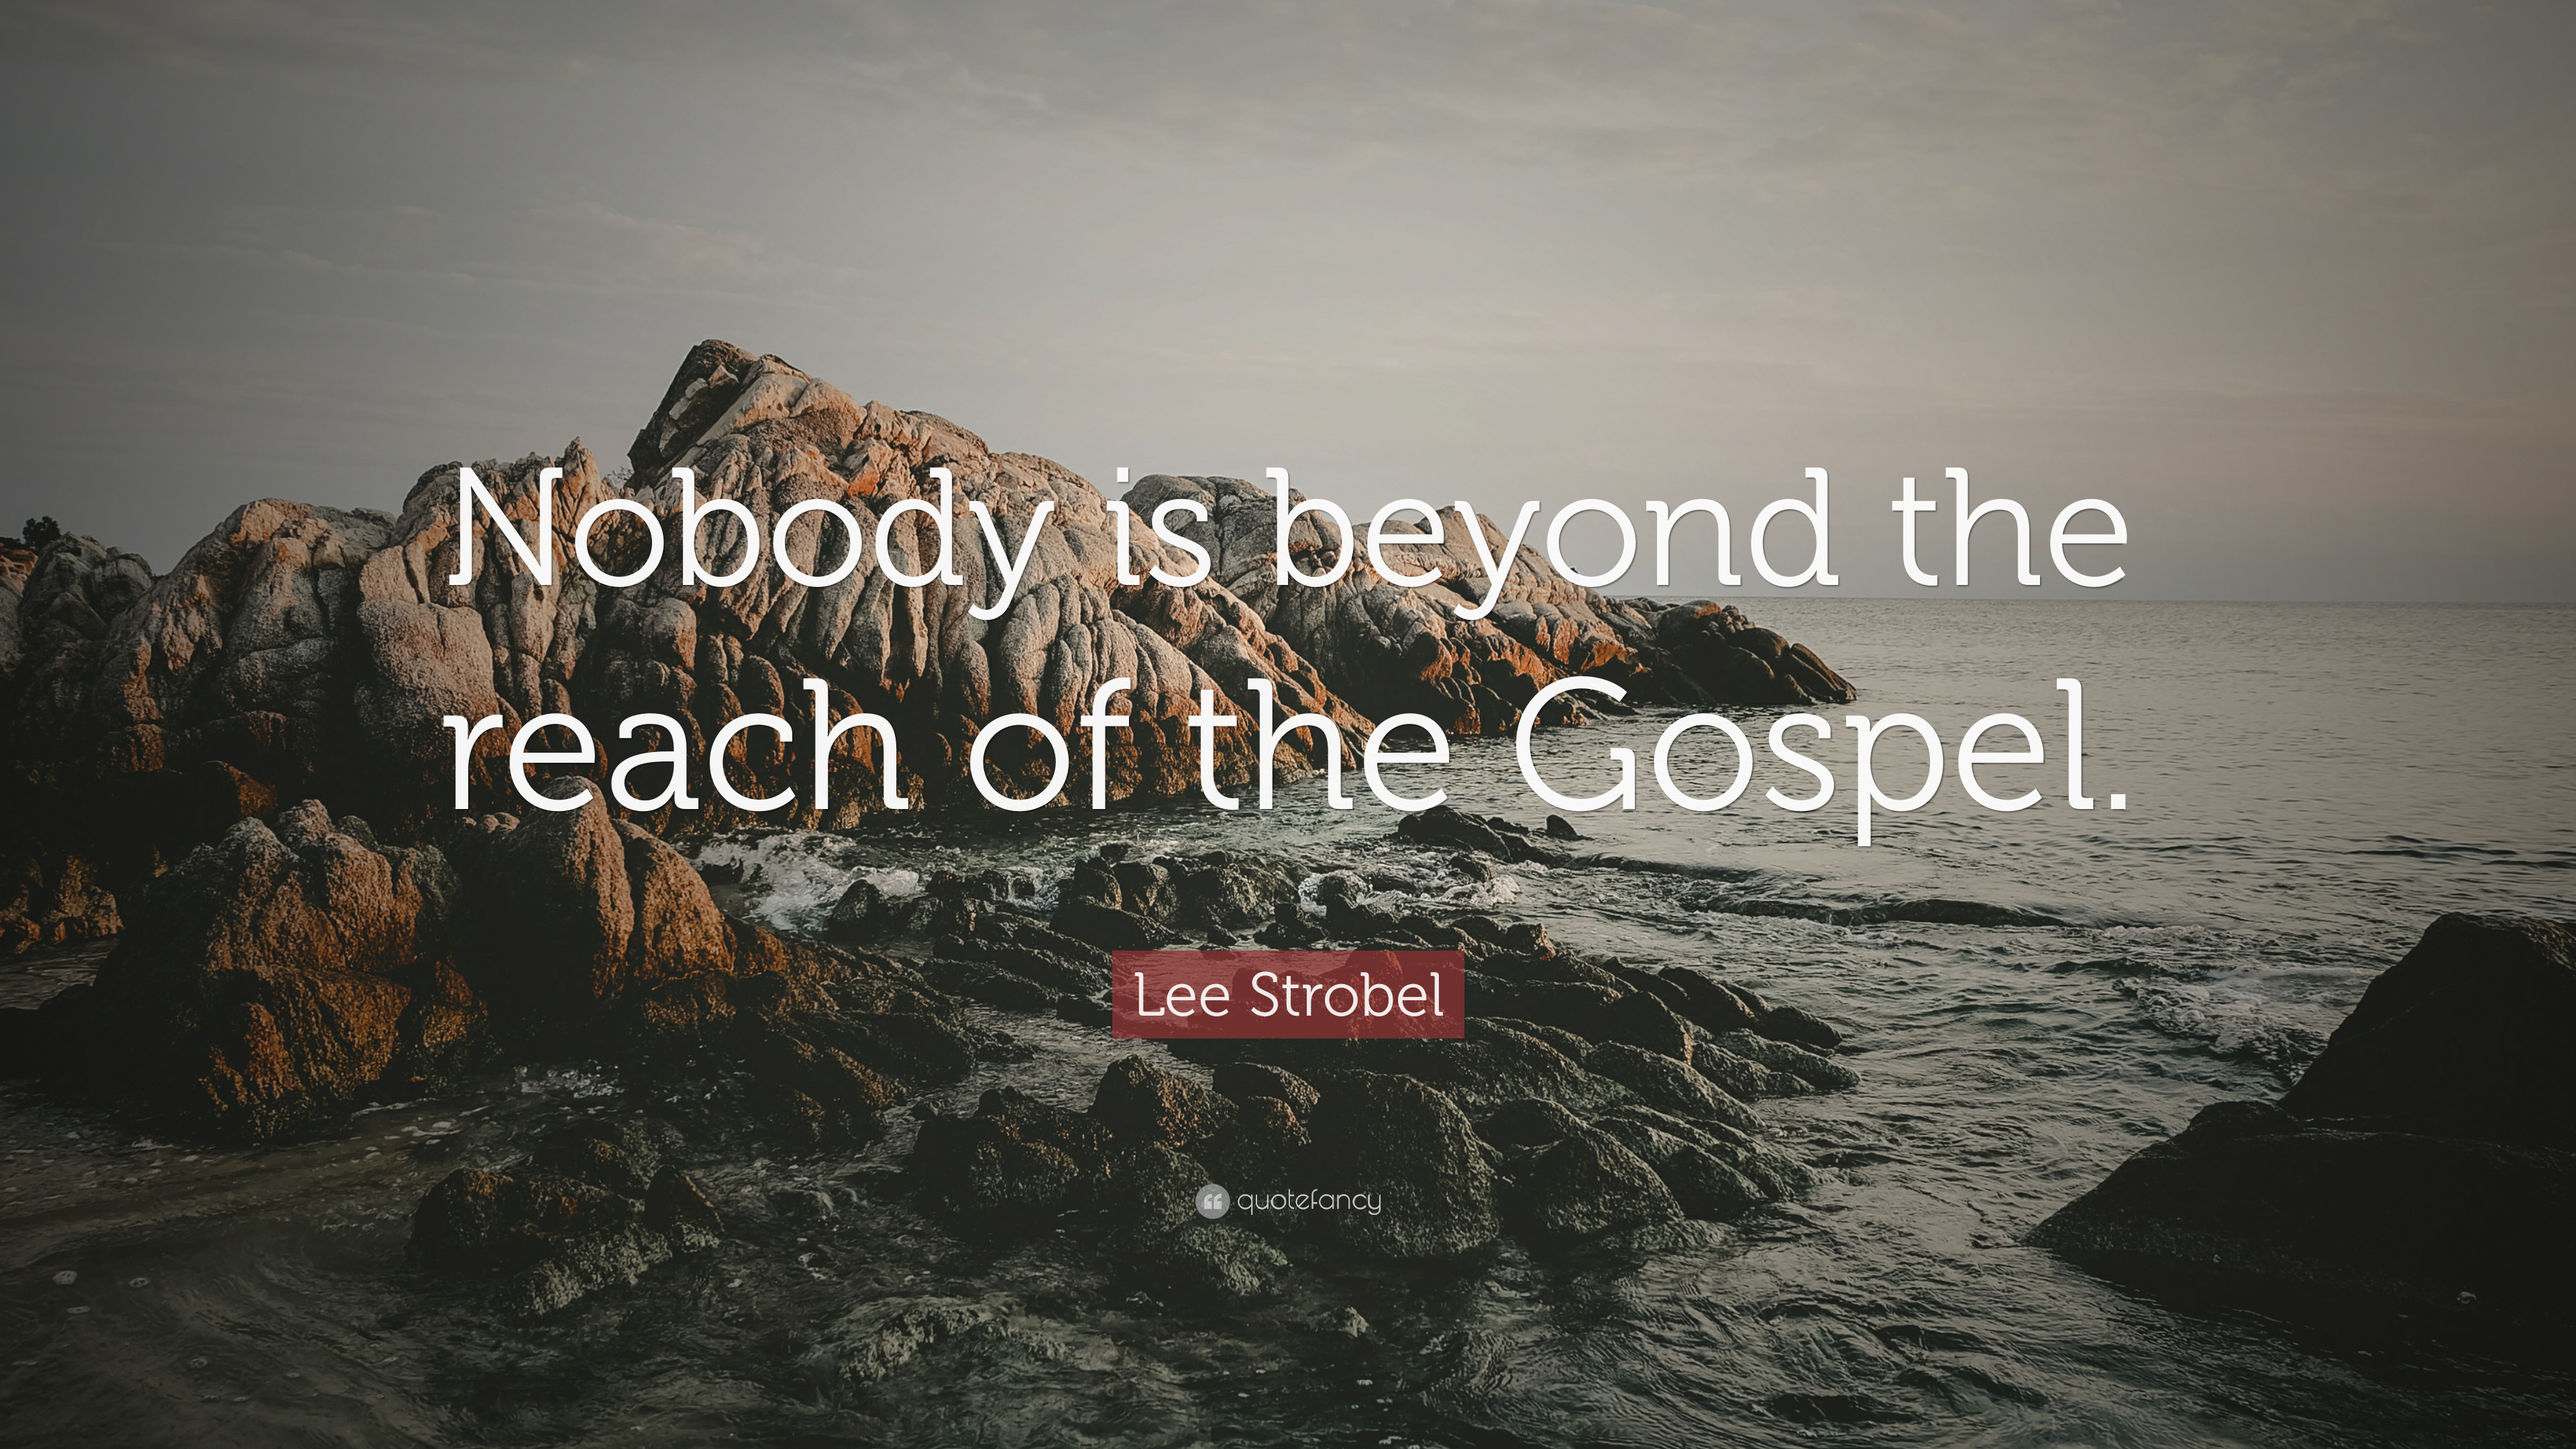 3840x2160 Lee Strobel Quote: “Nobody is beyond the reach of the Gospel.”